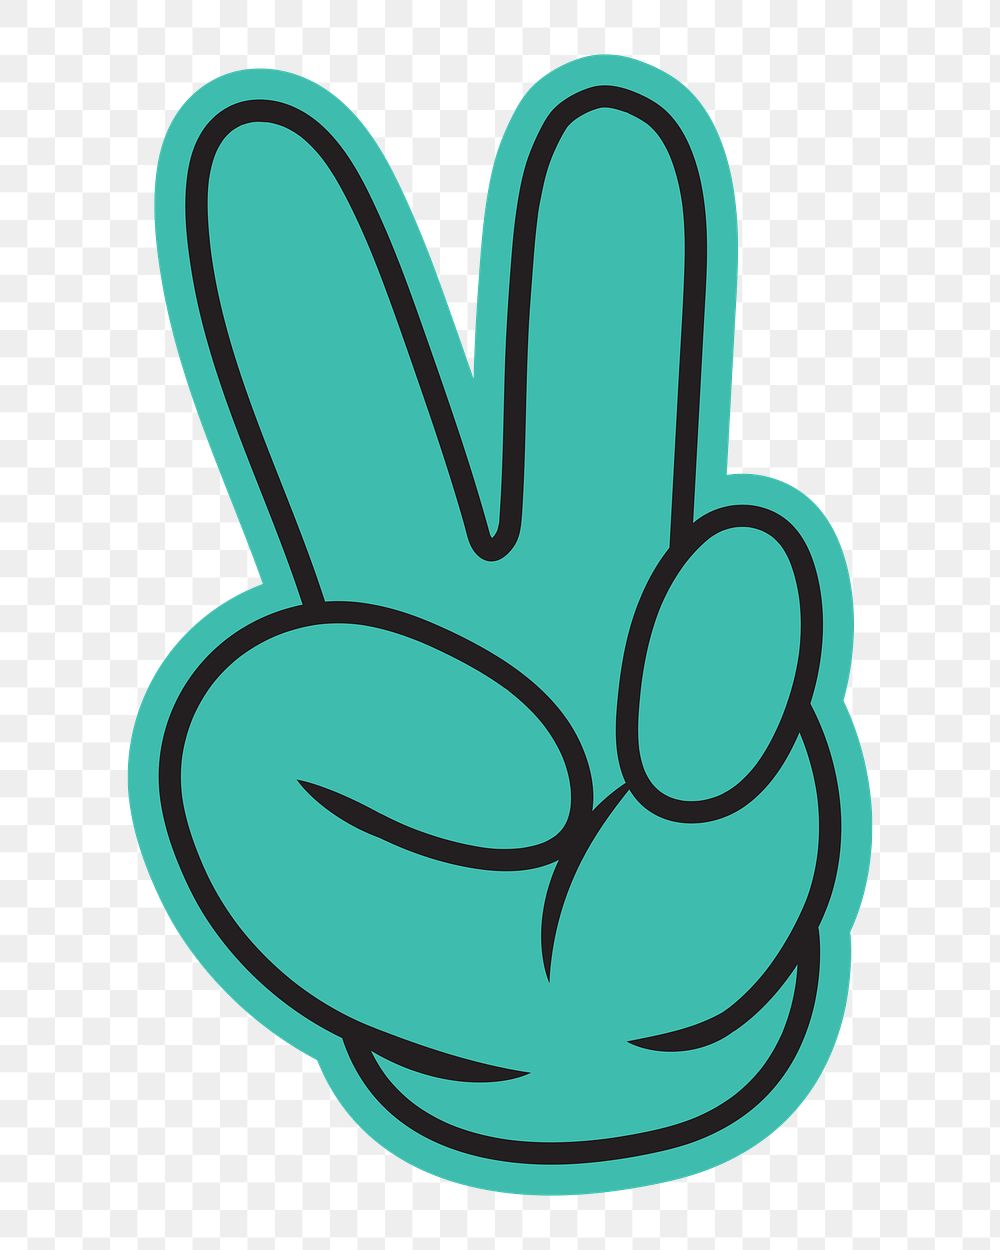 Cartoon peace hand sign png, gesture line art illustration, transparent background